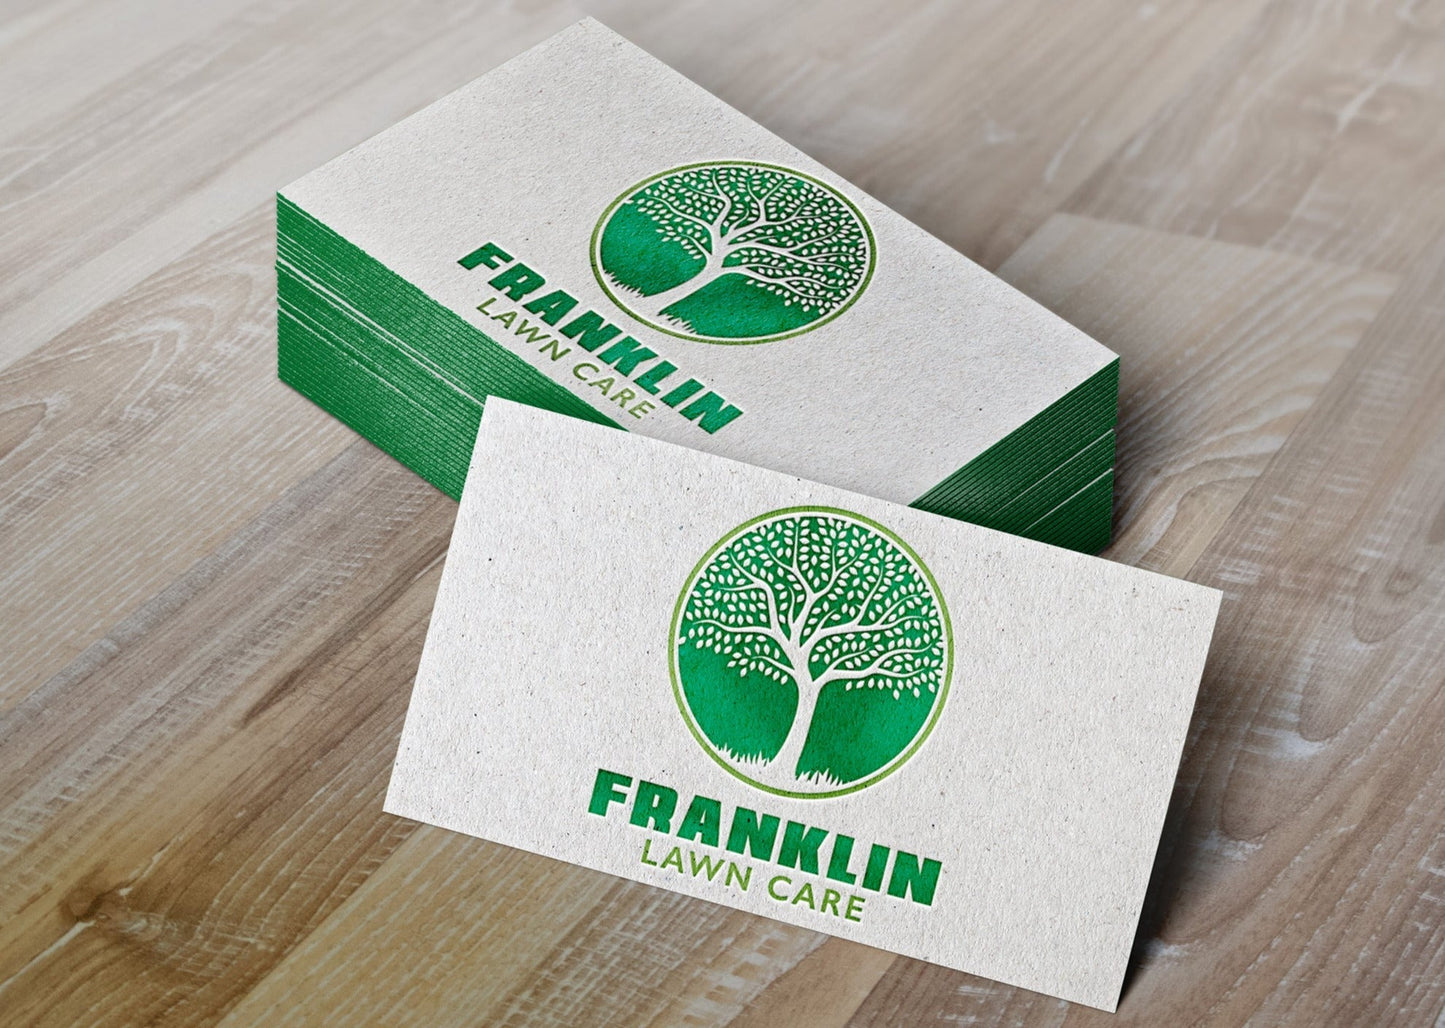 Landscaping Logo Design | Pine Tree | Professional Landscaping | Landscaping Business | Lawn Care Business | Company | Lawn Maintenance Logo